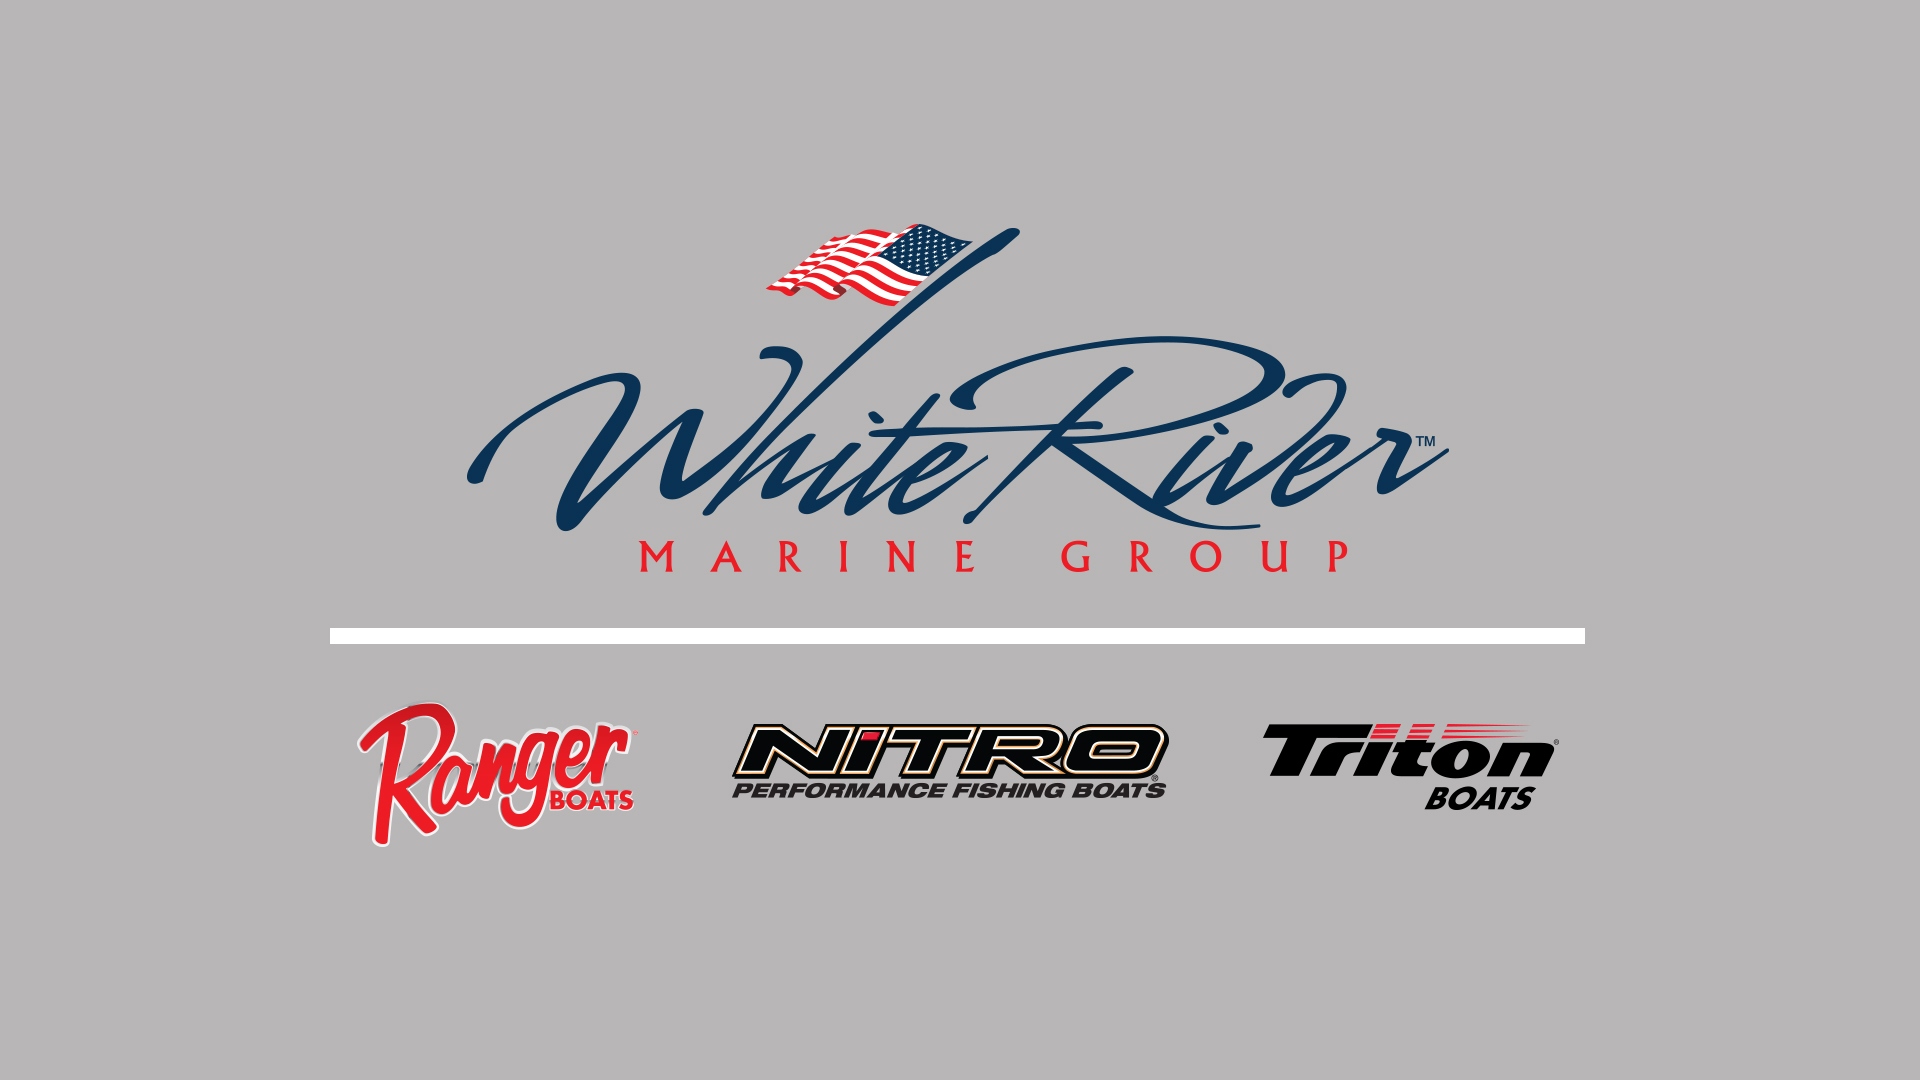 FLW, White River MG Expand Partnership - Major League Fishing